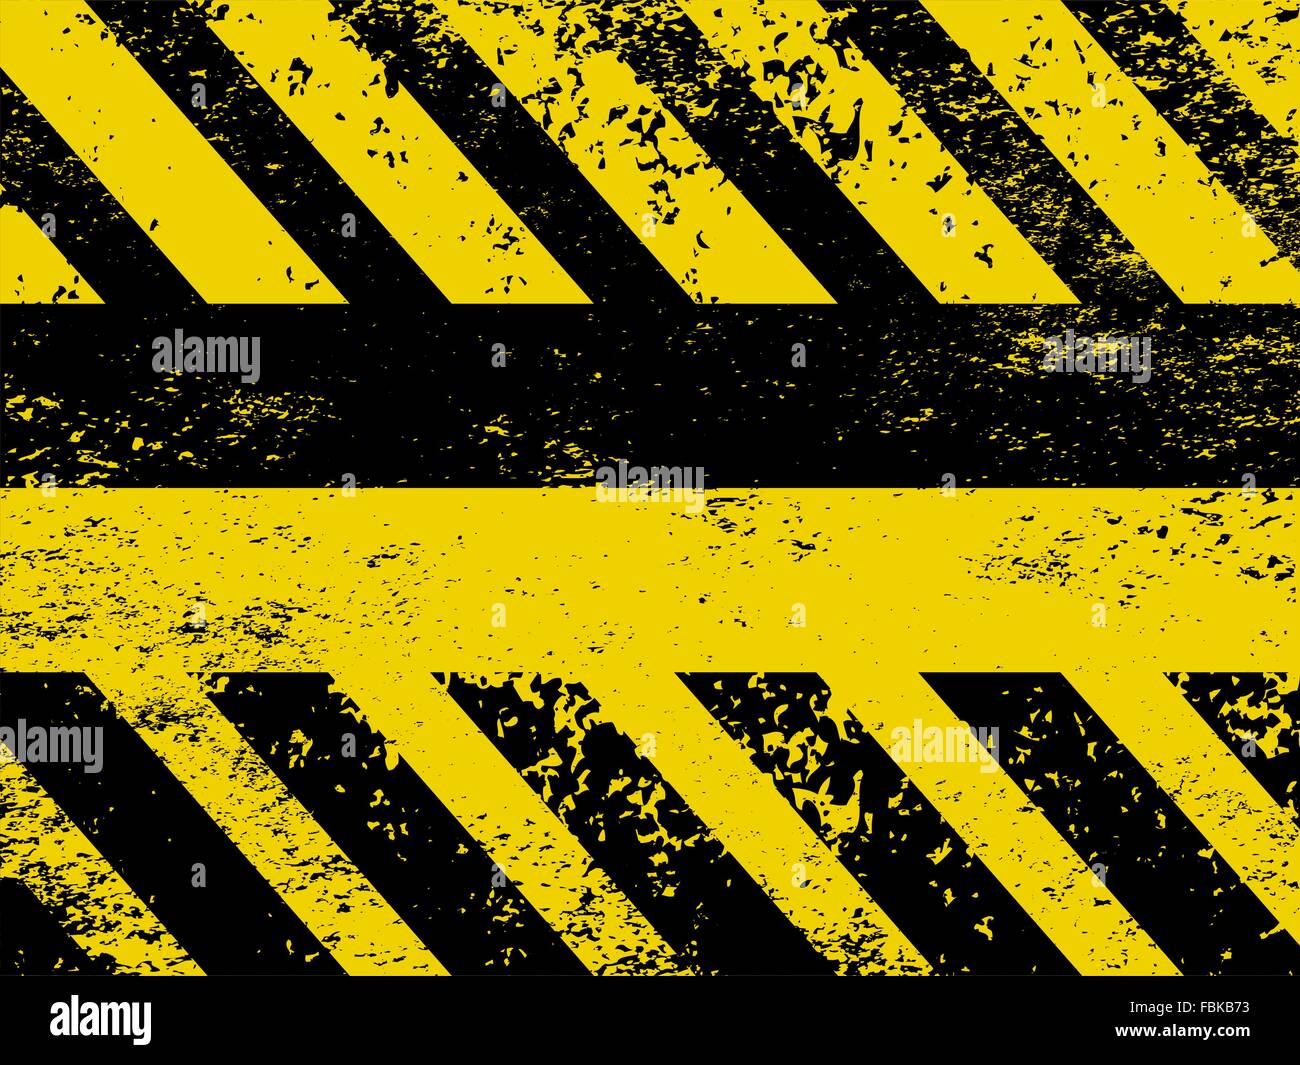 60,696 Hazard Black Yellow Images, Stock Photos, 3D objects, & Vectors